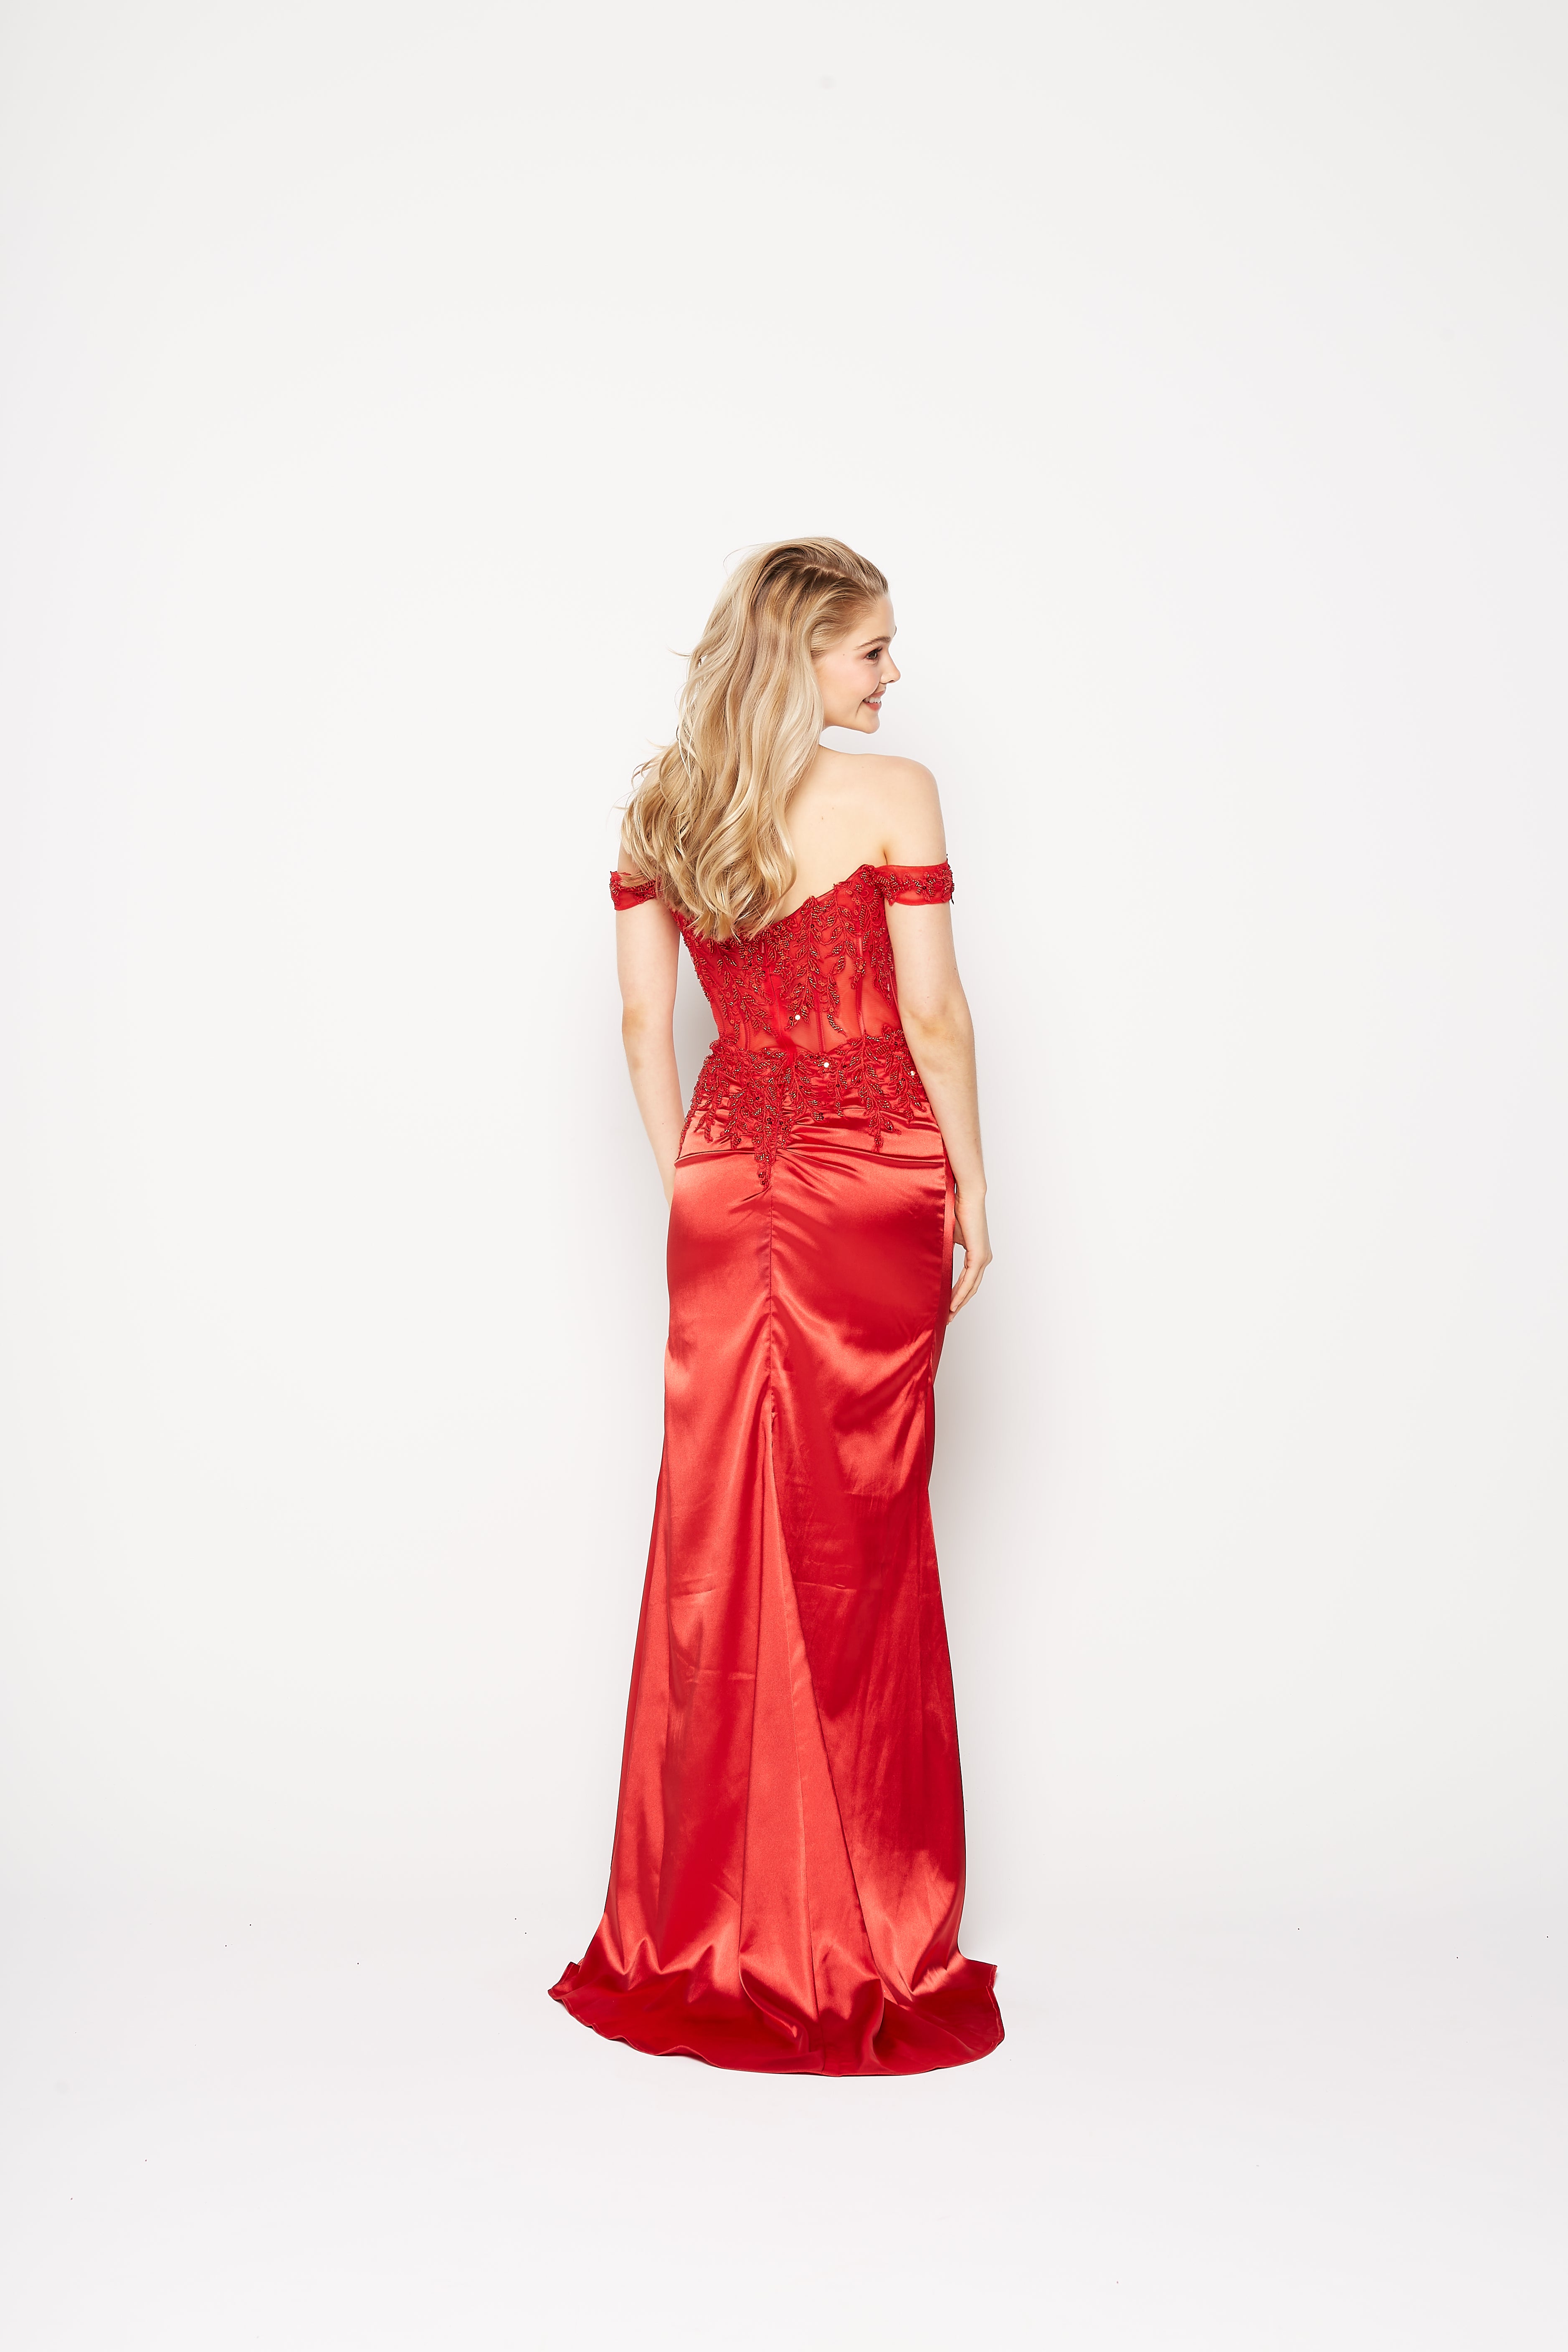 Lorelei PO2304 by Tania Olsen Navy, & Red Formal Dress